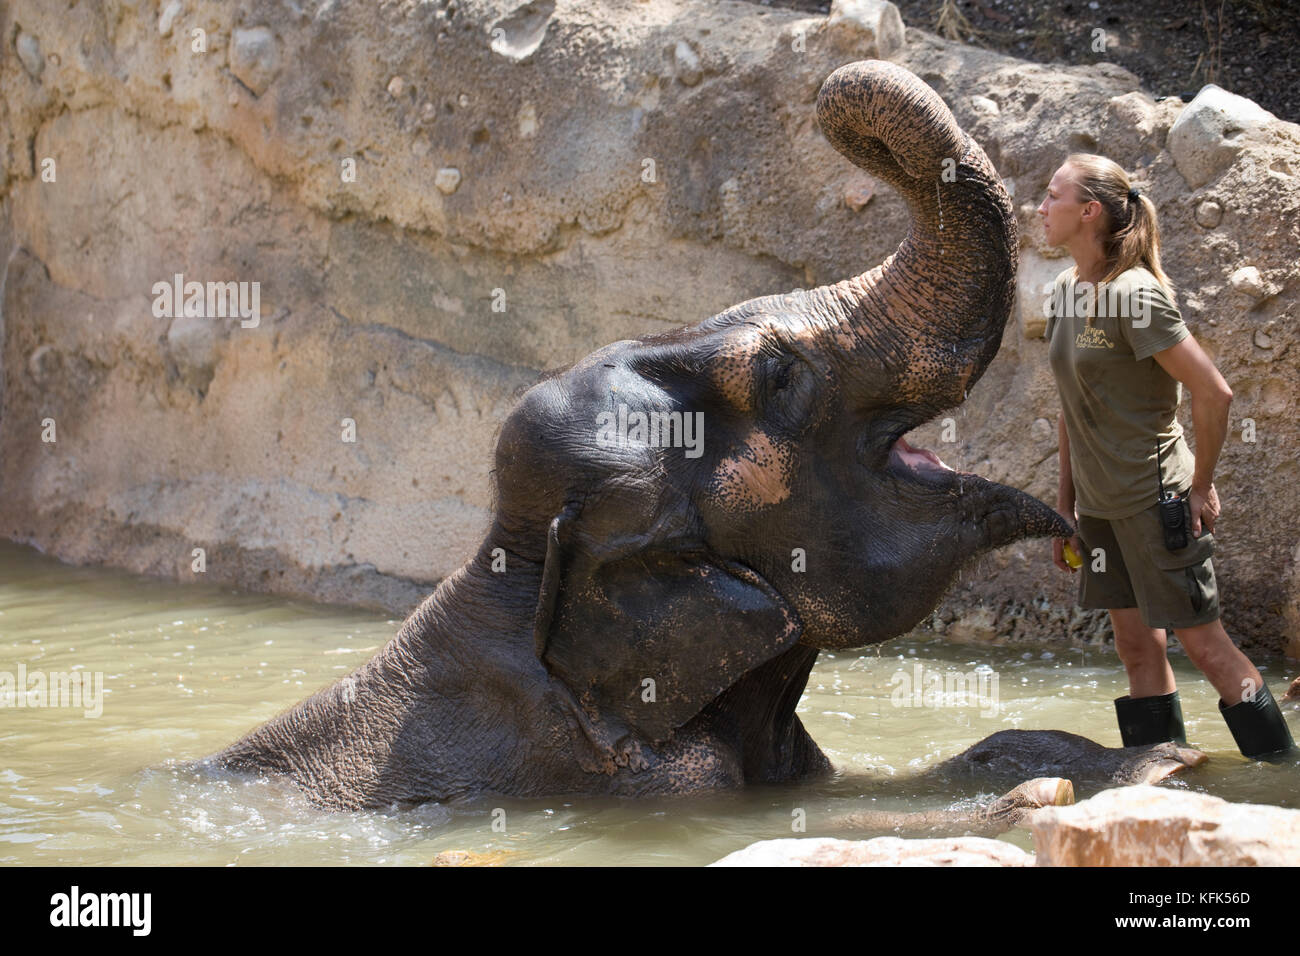 Female Zoo-keeper feeding an elephants apples in captivity, Spain Stock Photo